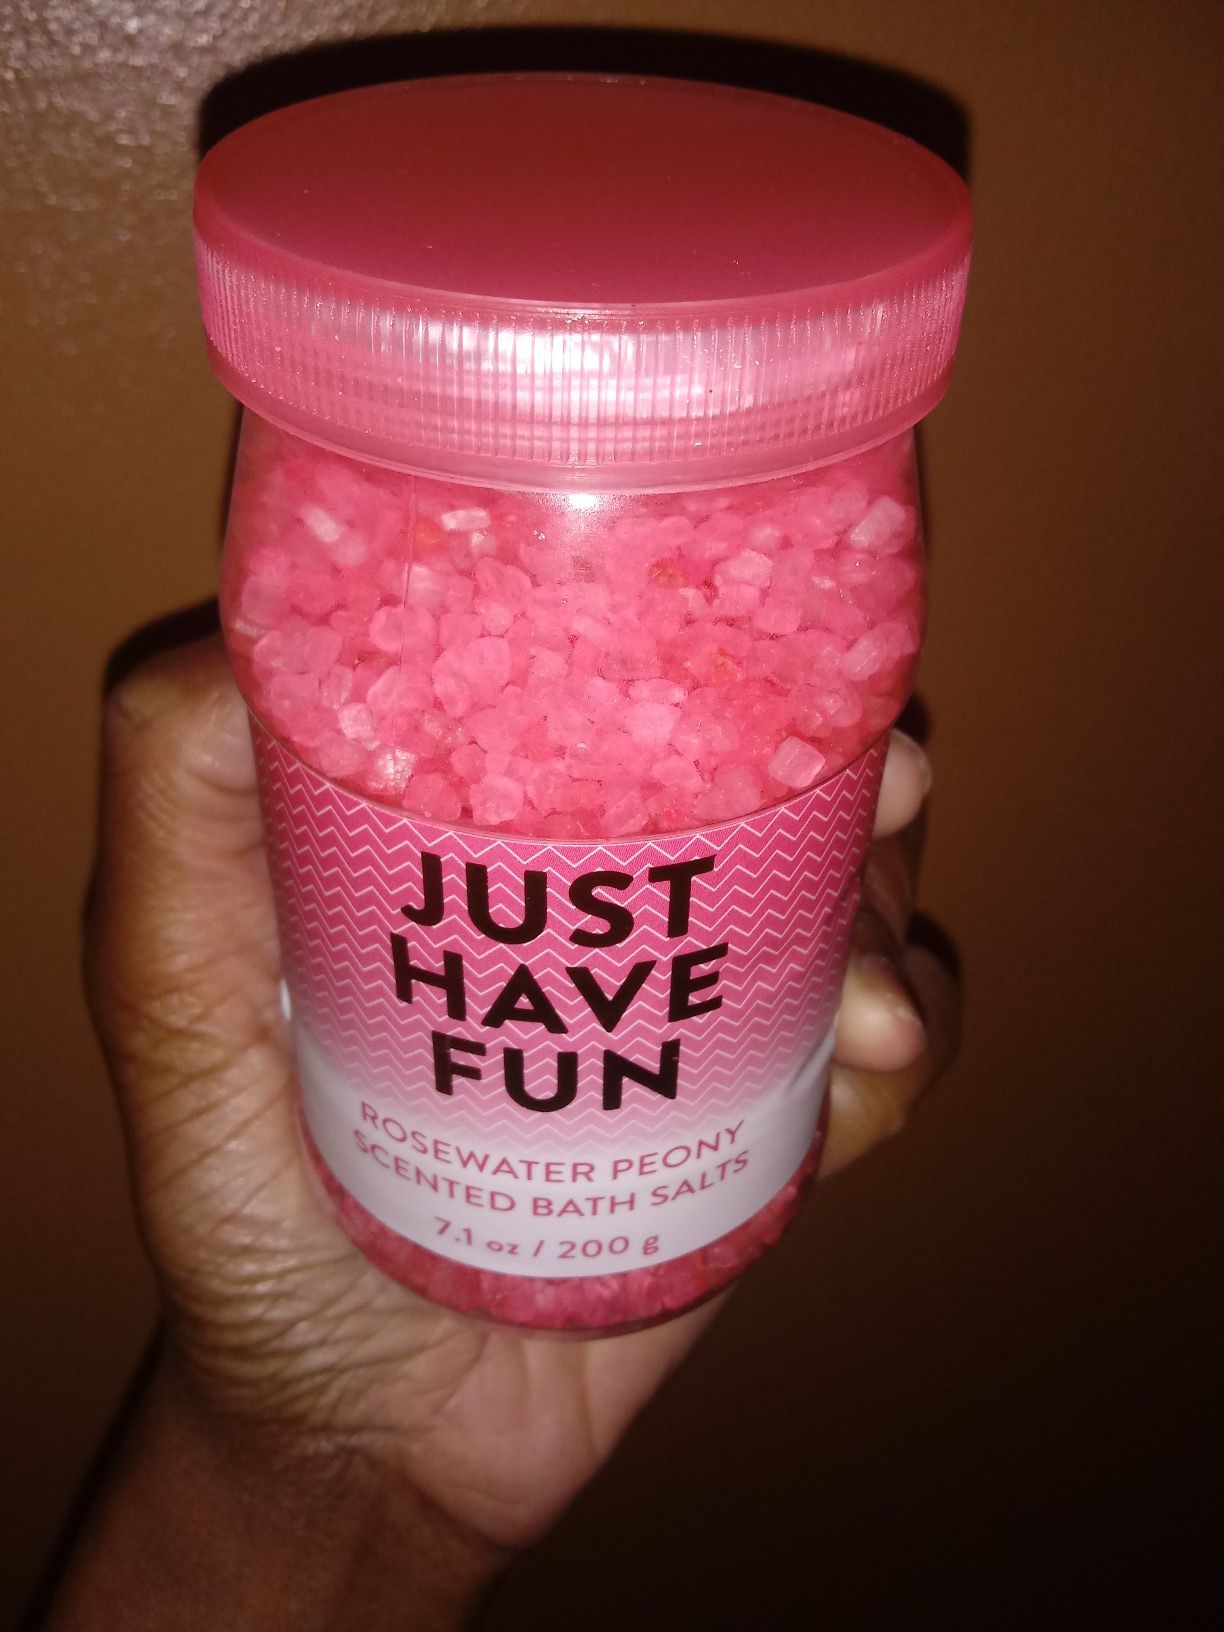 Free, Pink scented bath salts